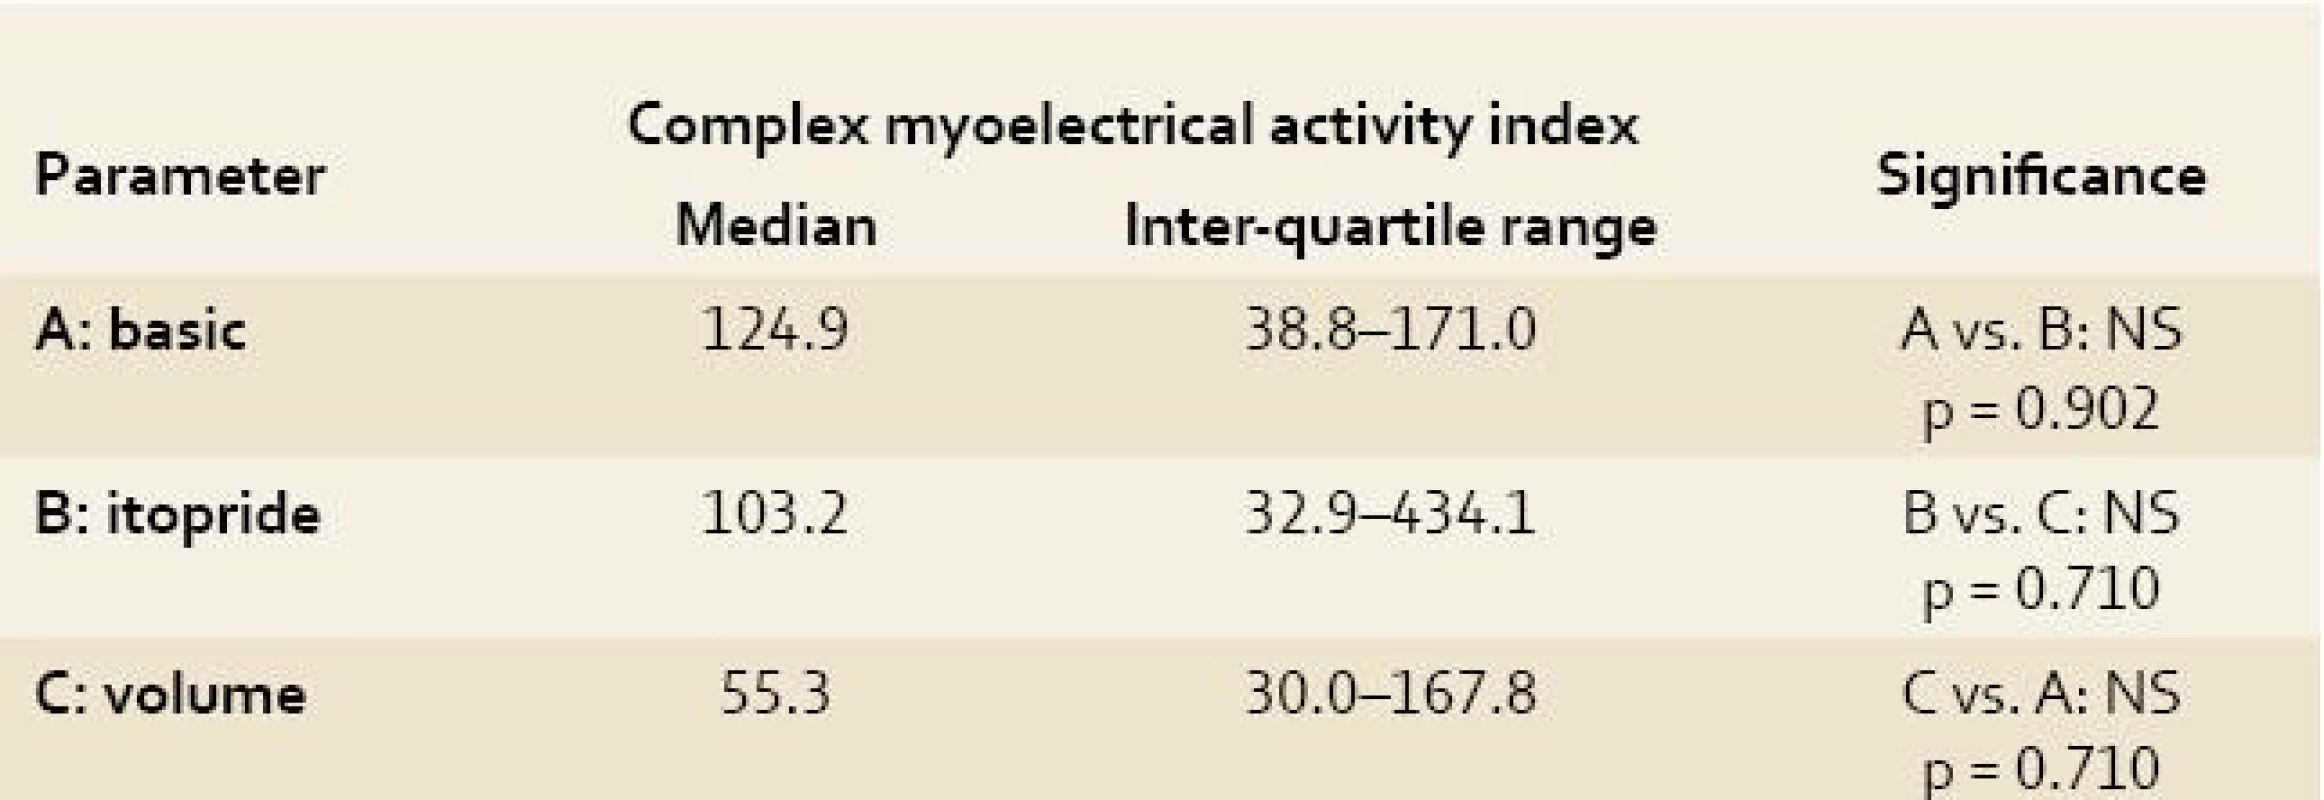 Complex myoelectrical activity index of electrogastrography recording in experimental pigs.
Tab. 3. Index komplexní myoelektrické aktivity na elektrogastrografickém záznamu u experimentálních prasat.